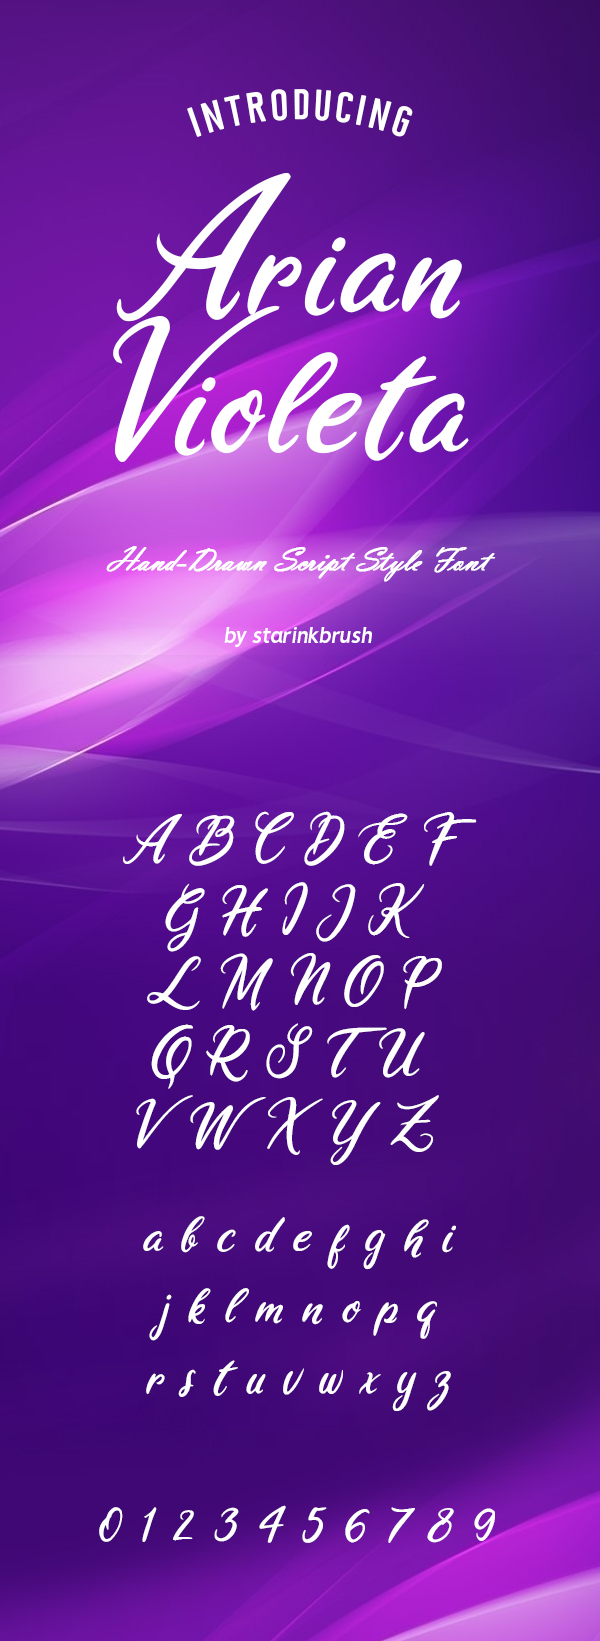 Ariana Violeta Free Font Design